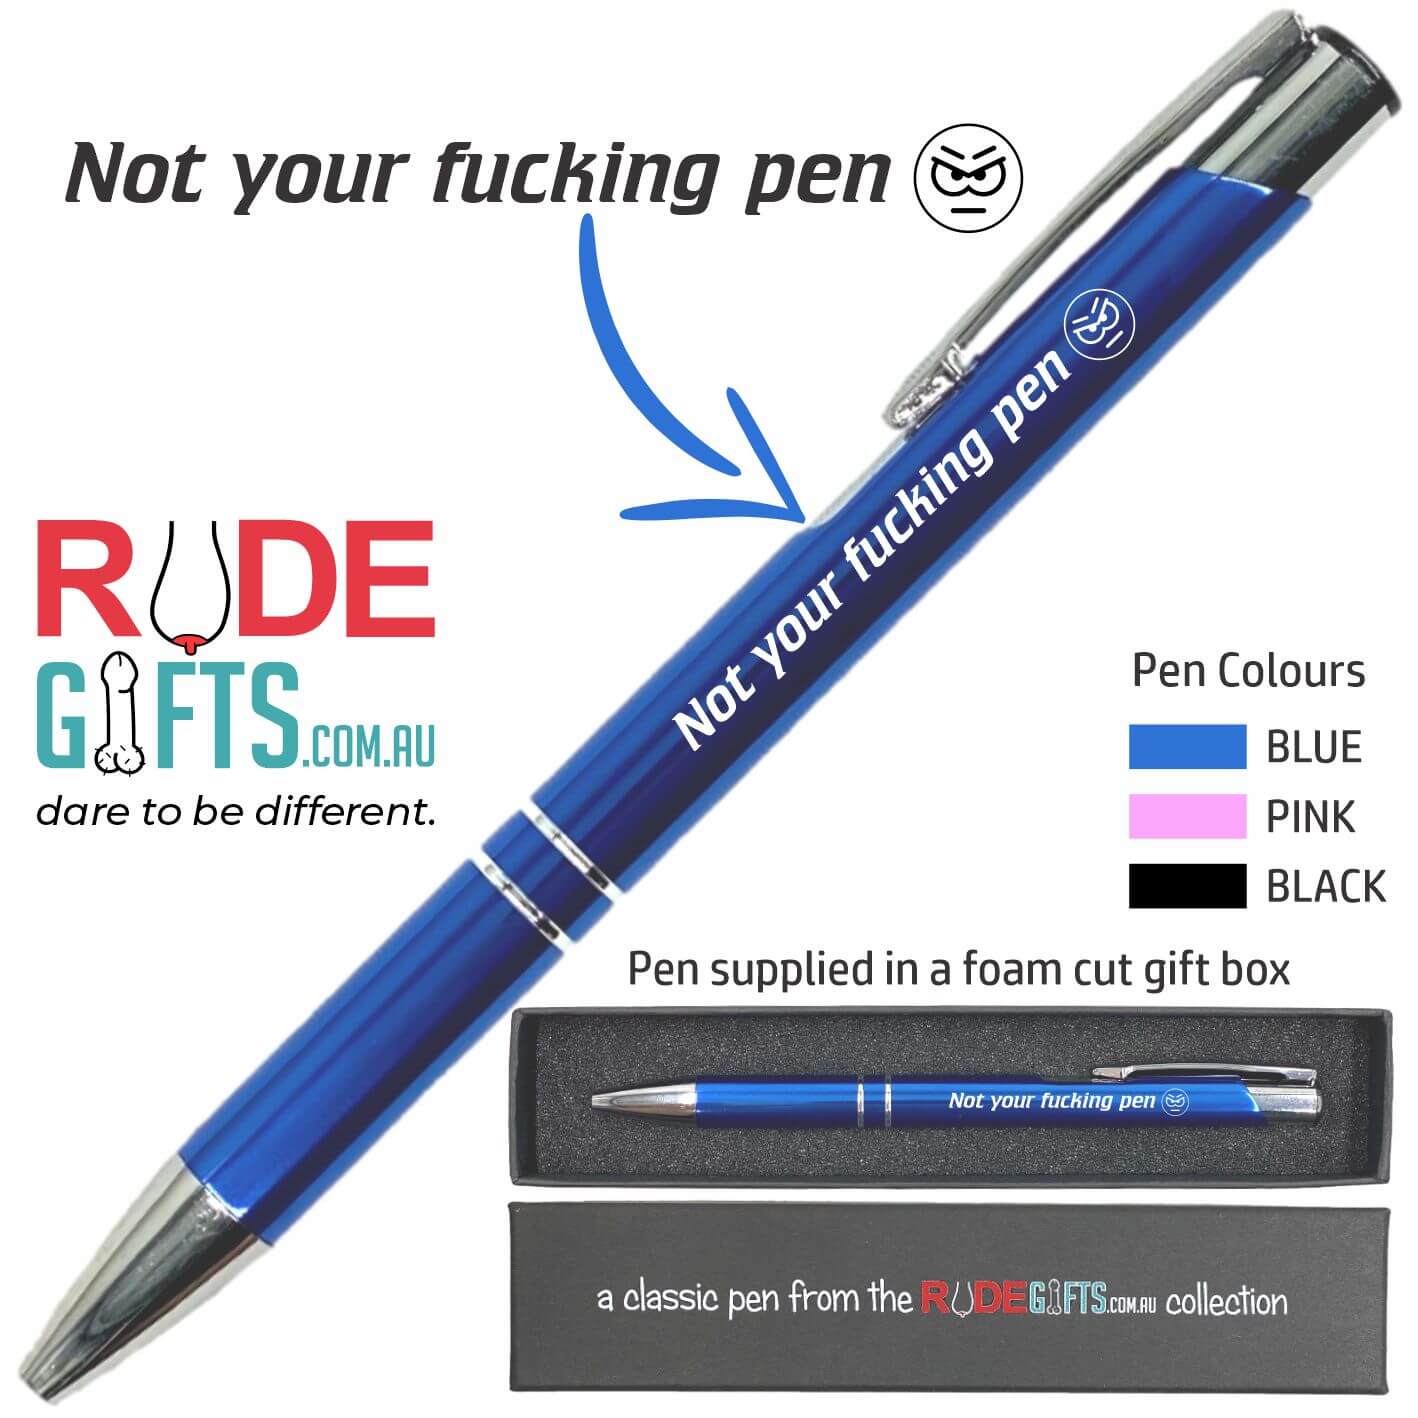 Not your fucking pen